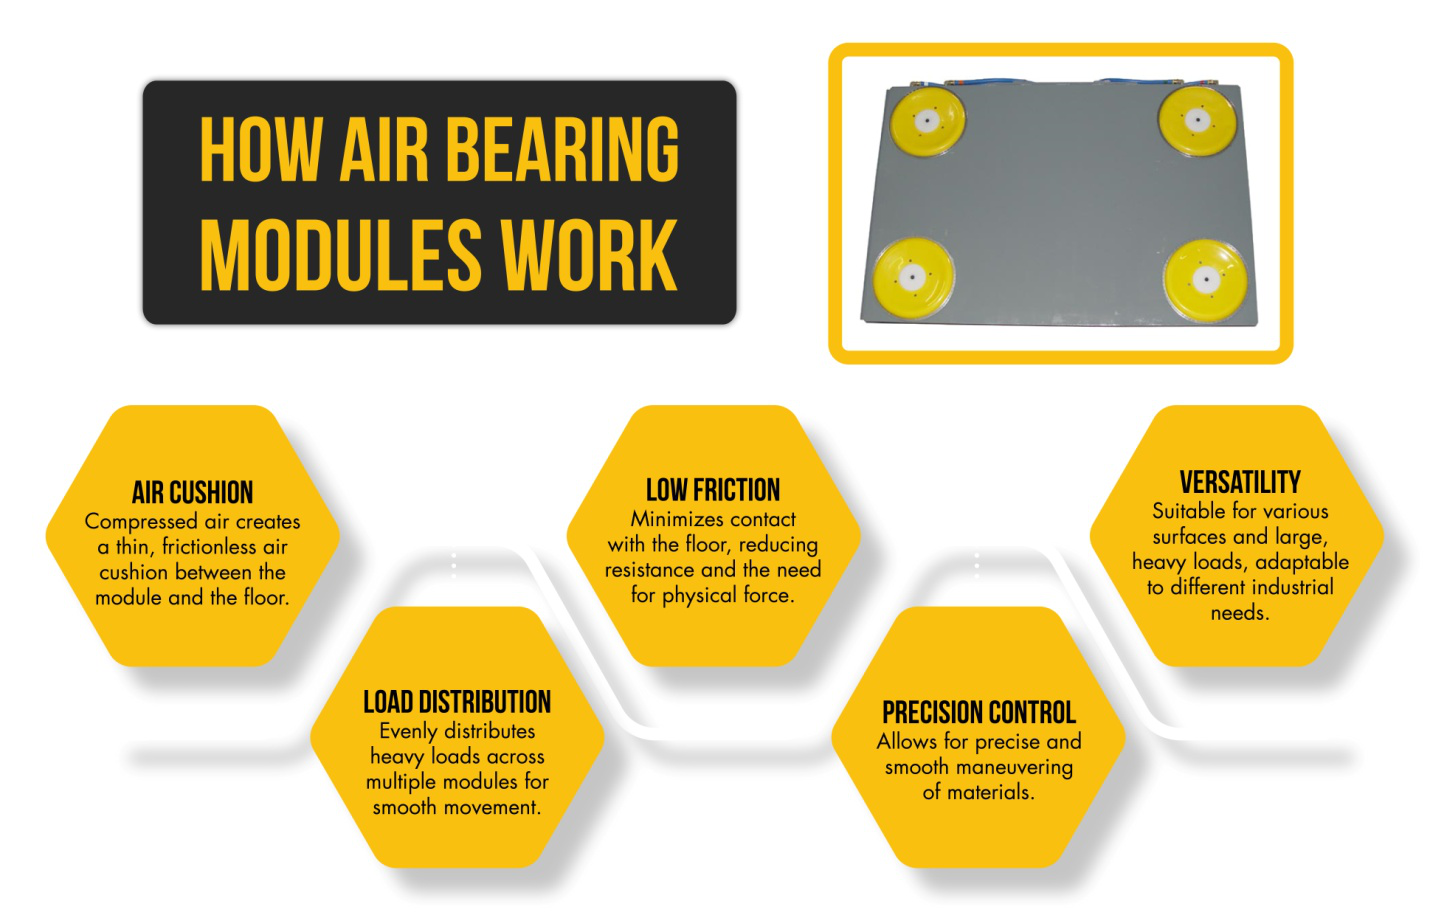 An infographic explaining how air bearing modules work